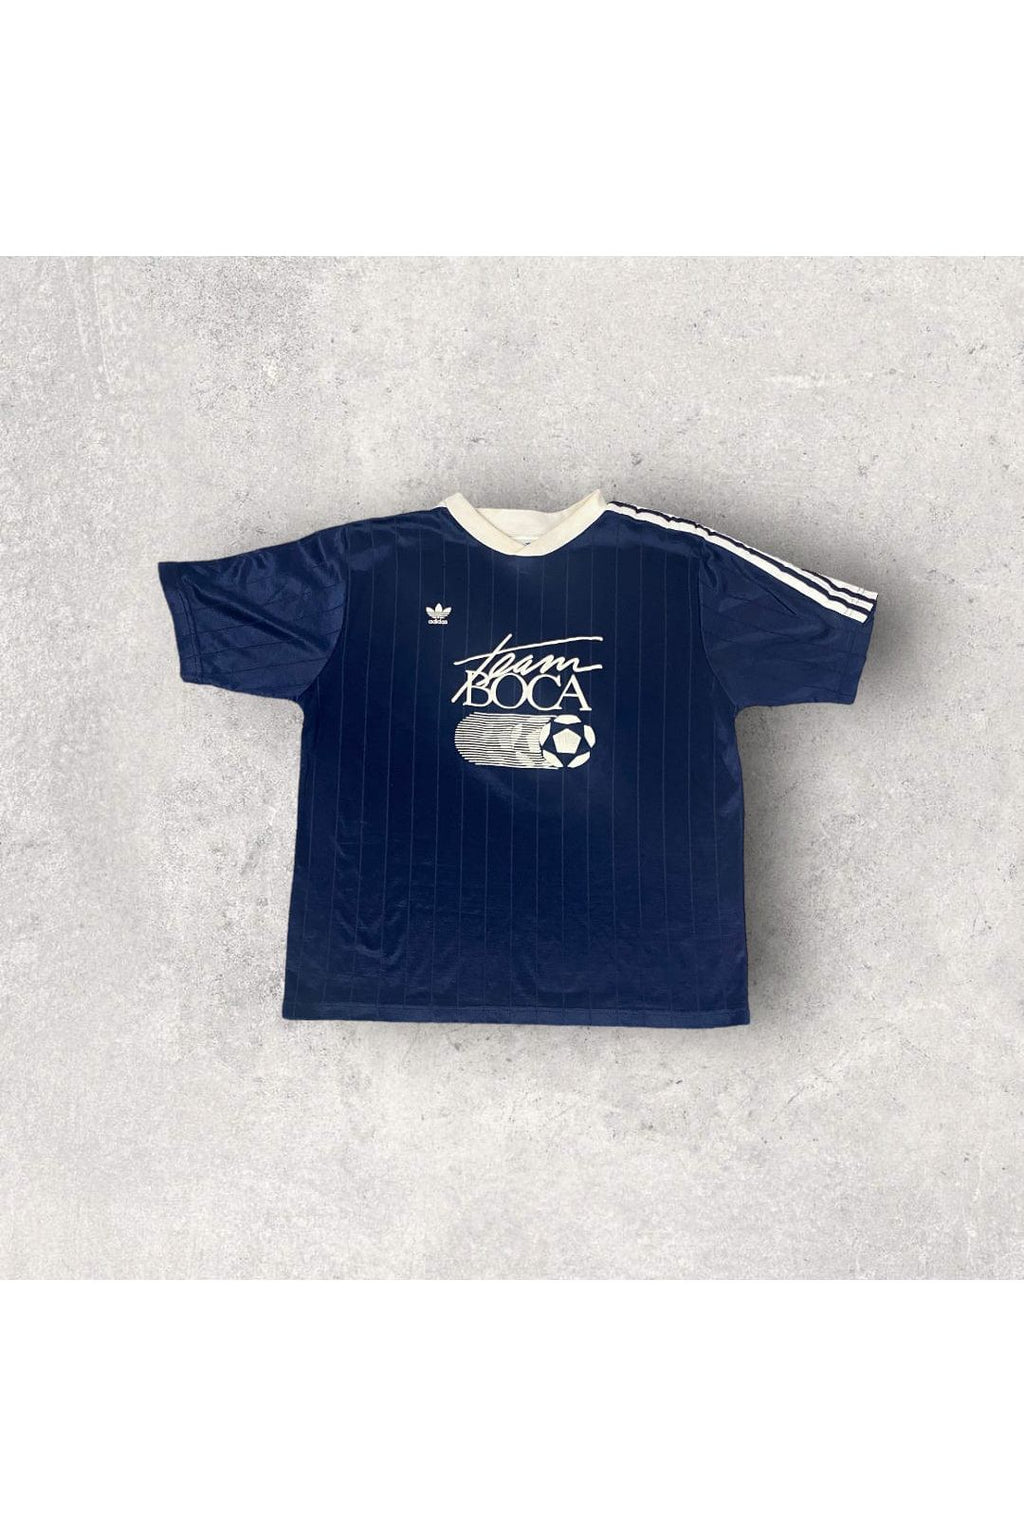 Vintage Adidas Team Boca #3 Soccer Jersey- L